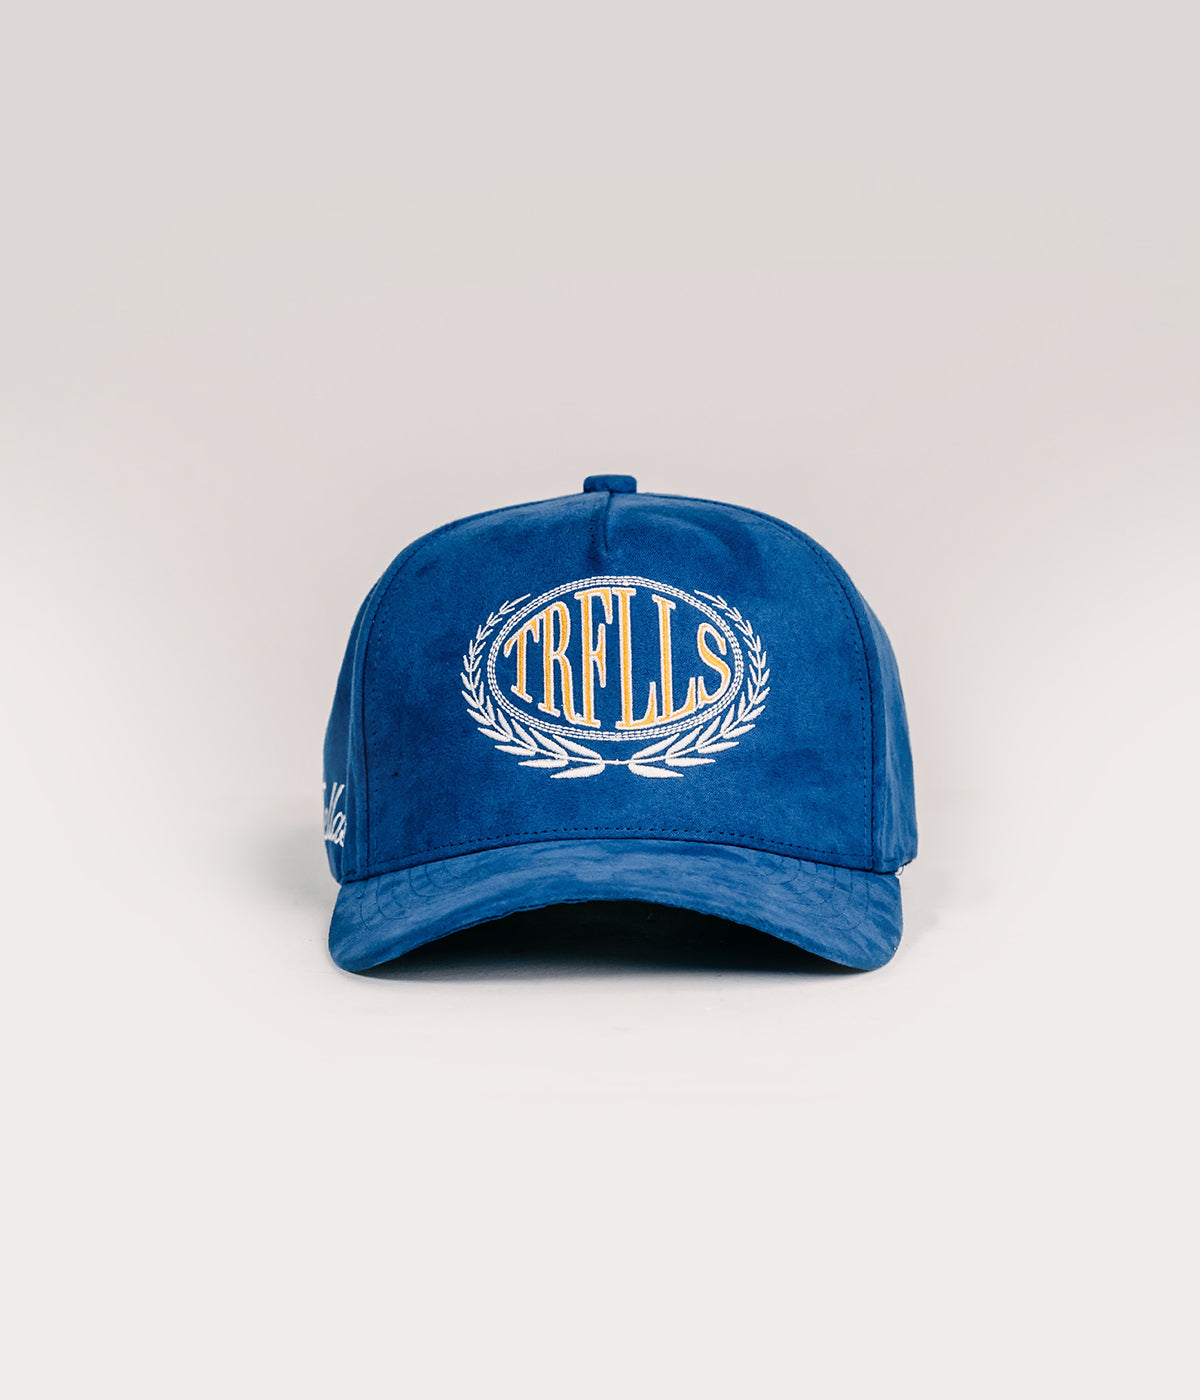 FELLAS ORIGIN CAP SUEDE UNIVERSITY BLUE